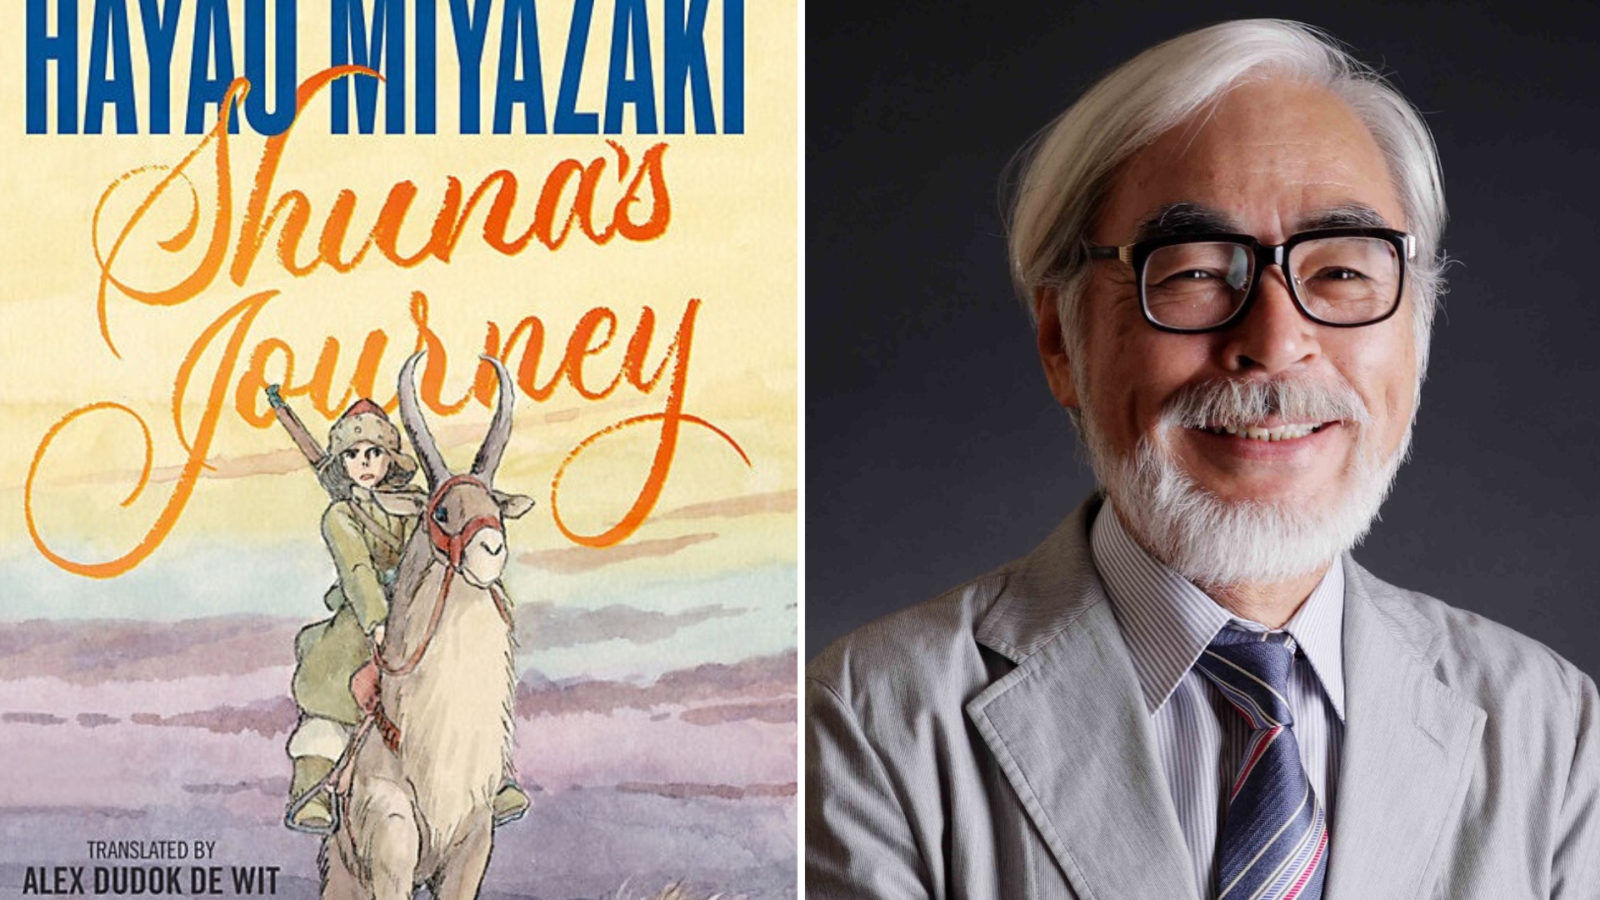 Hayao Miyazaki’s Standalone Graphic novel, ‘Shuna’s Journey’, to be Released in the US